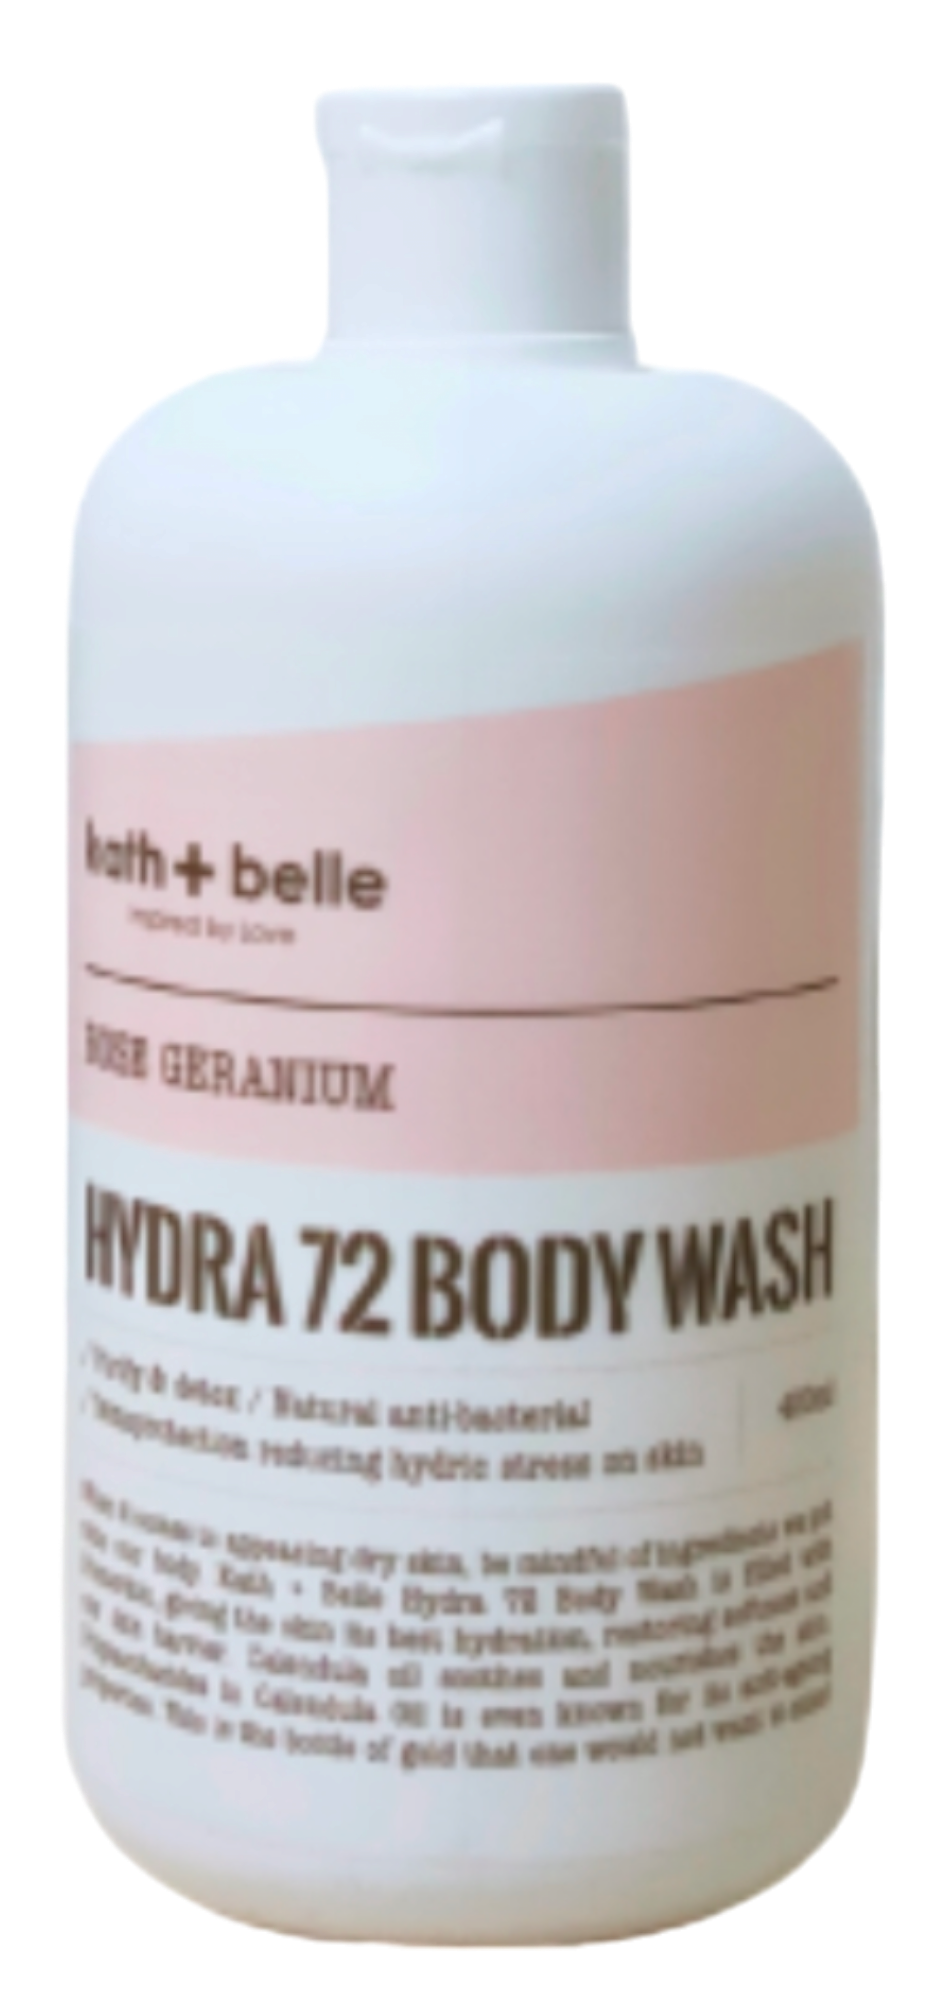 Kath+Belle Hydra 72 Body Wash Rose Geranium 400ml